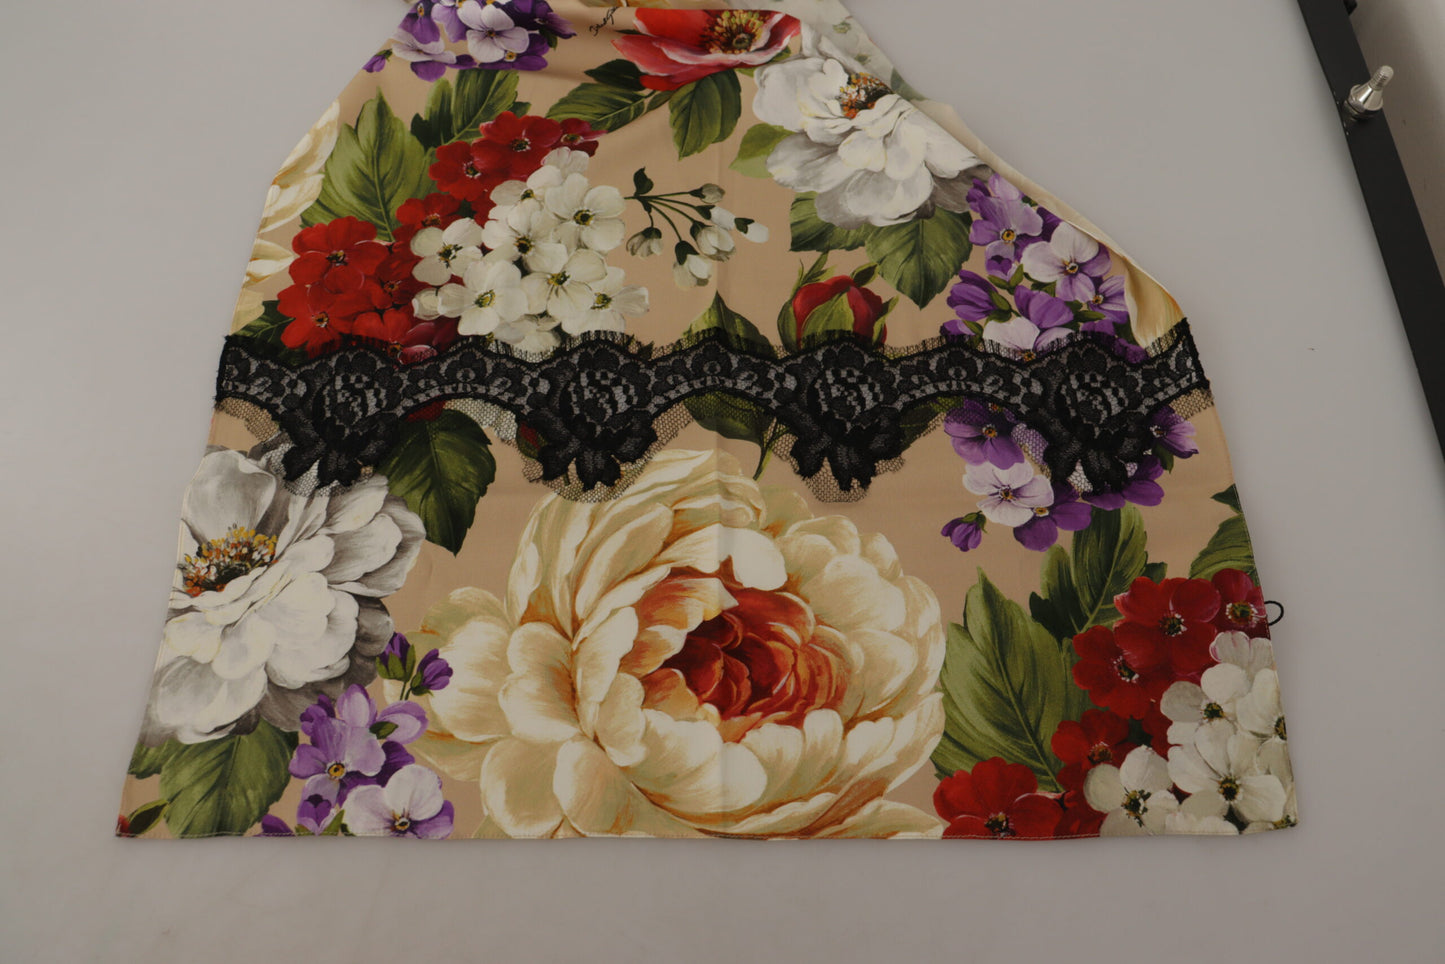 Floral Silk-Blend Luxury Scarf